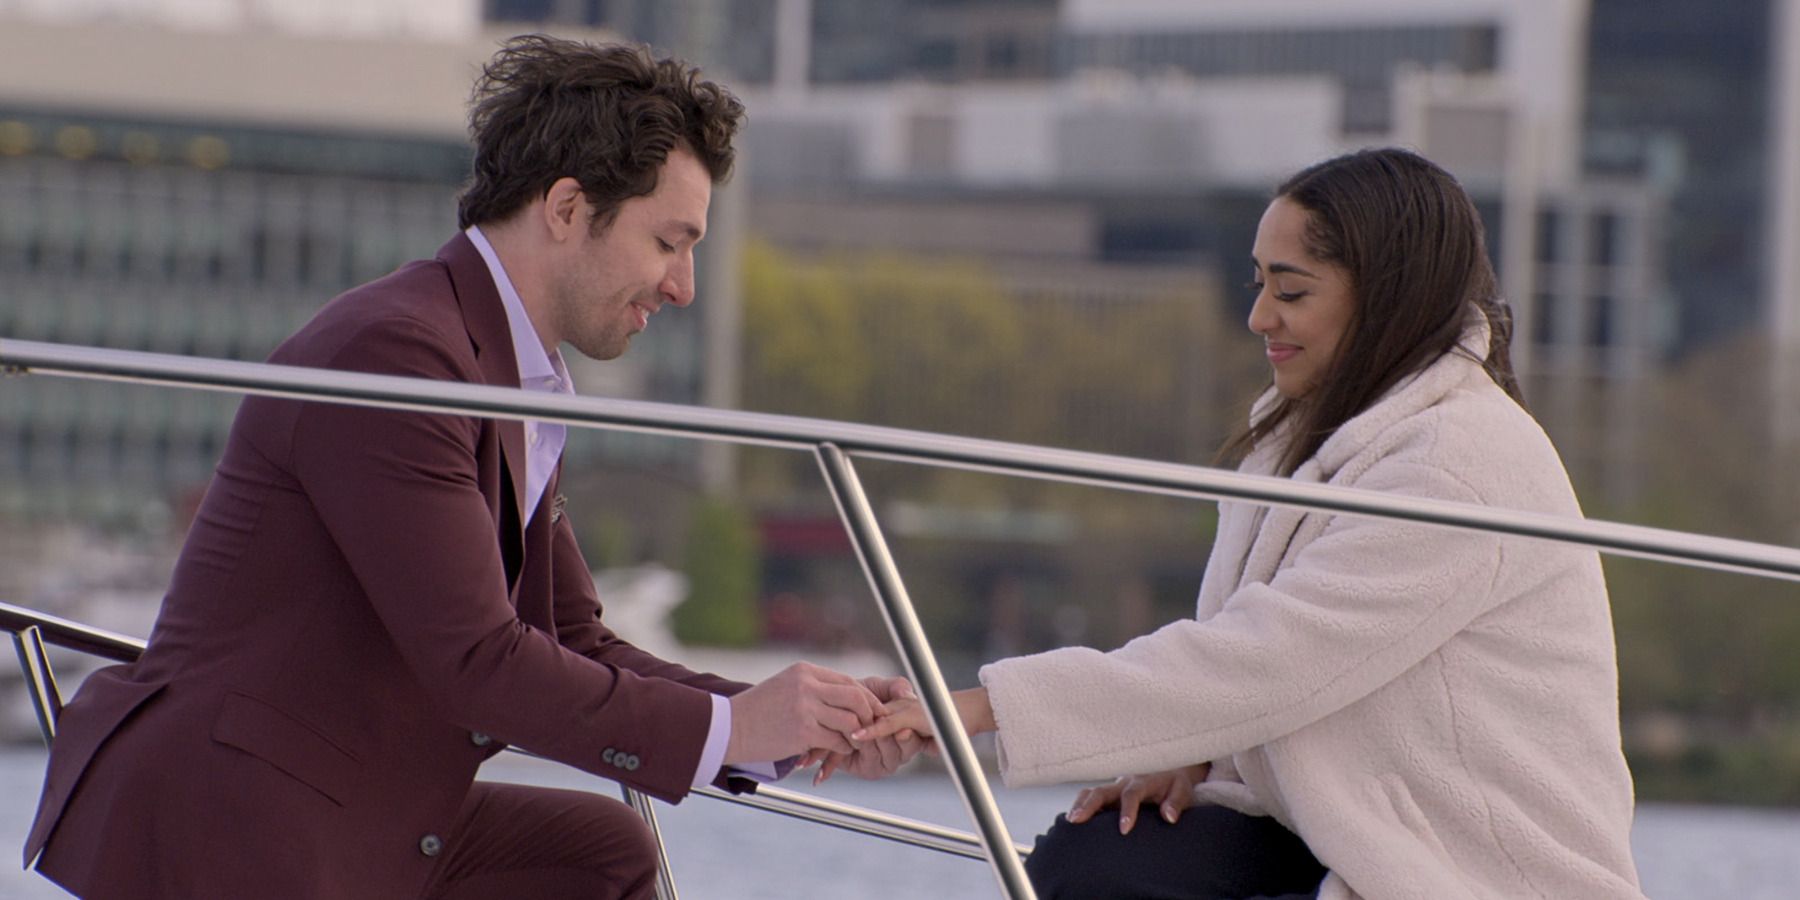 Love is Blind season 4 stars Bliss Poureetezadi and Zack Goytowski proposal scene